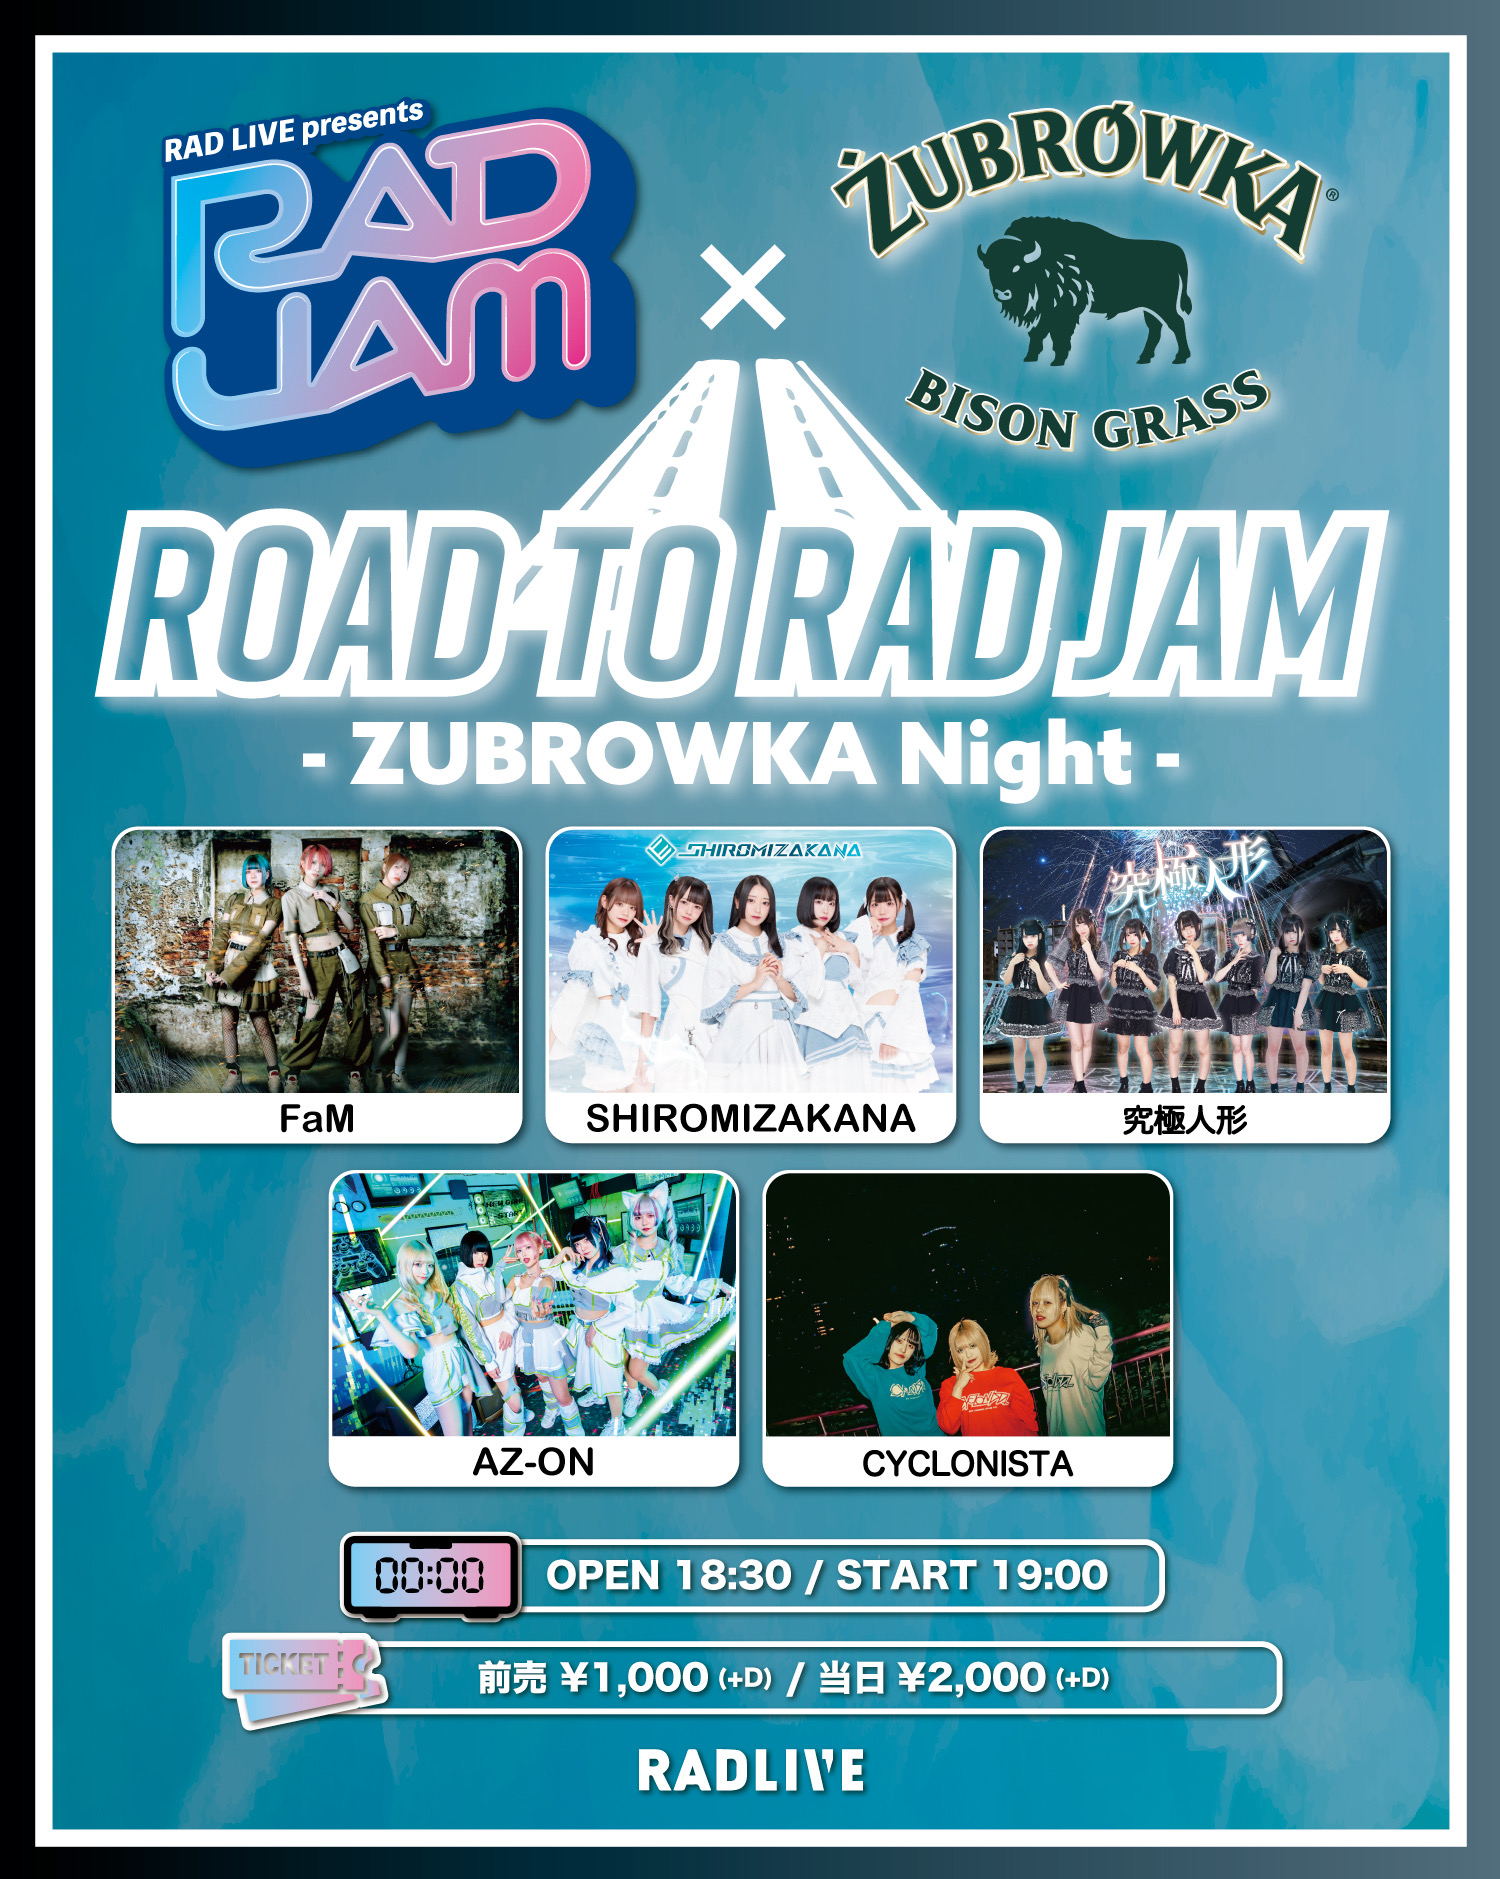 ROAD TO RAD JAM -ZUBROWKA Night-